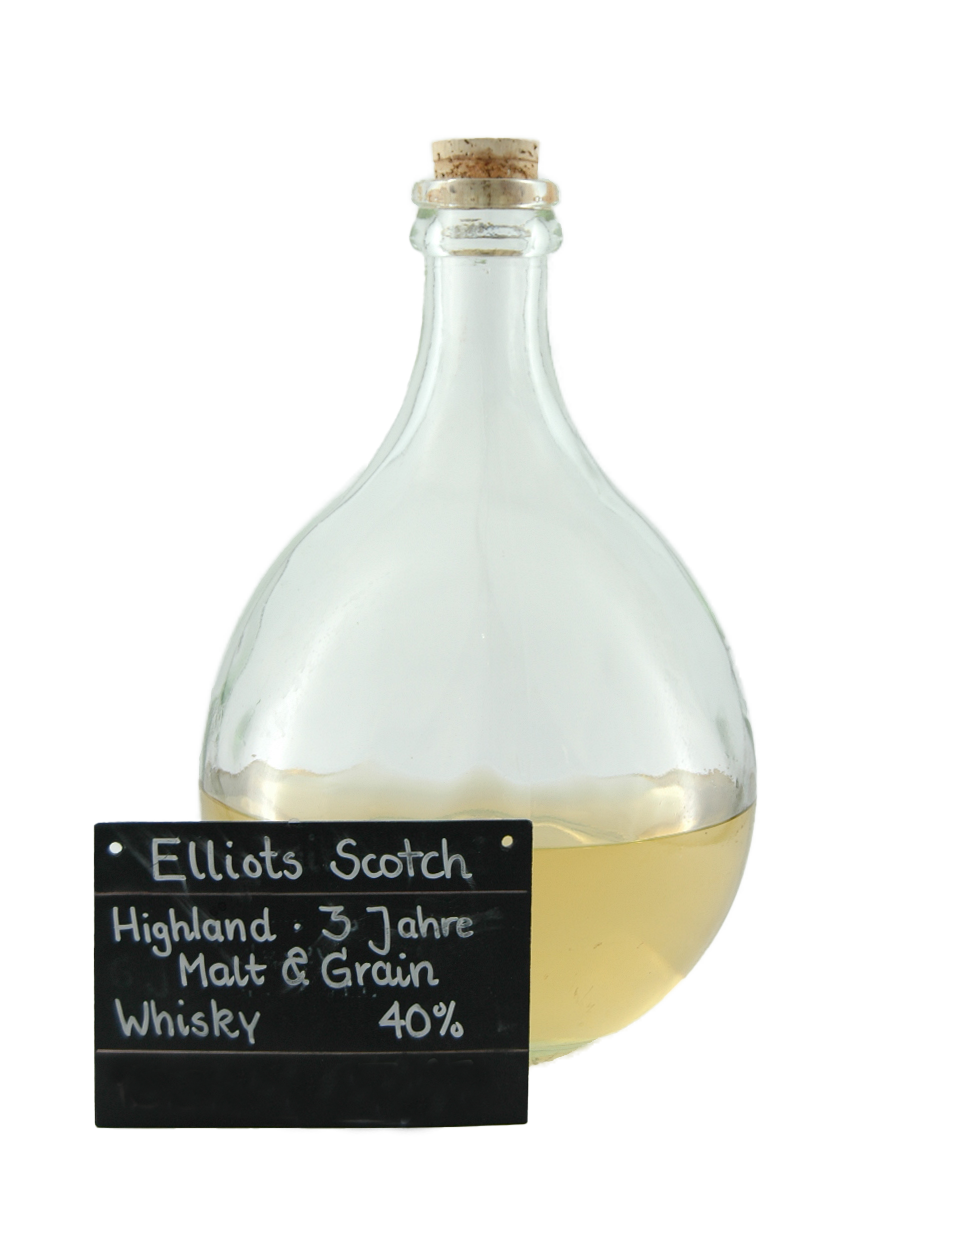 Elliots Scotch Whisky Malt & Grain 3 Jahre - 500ml